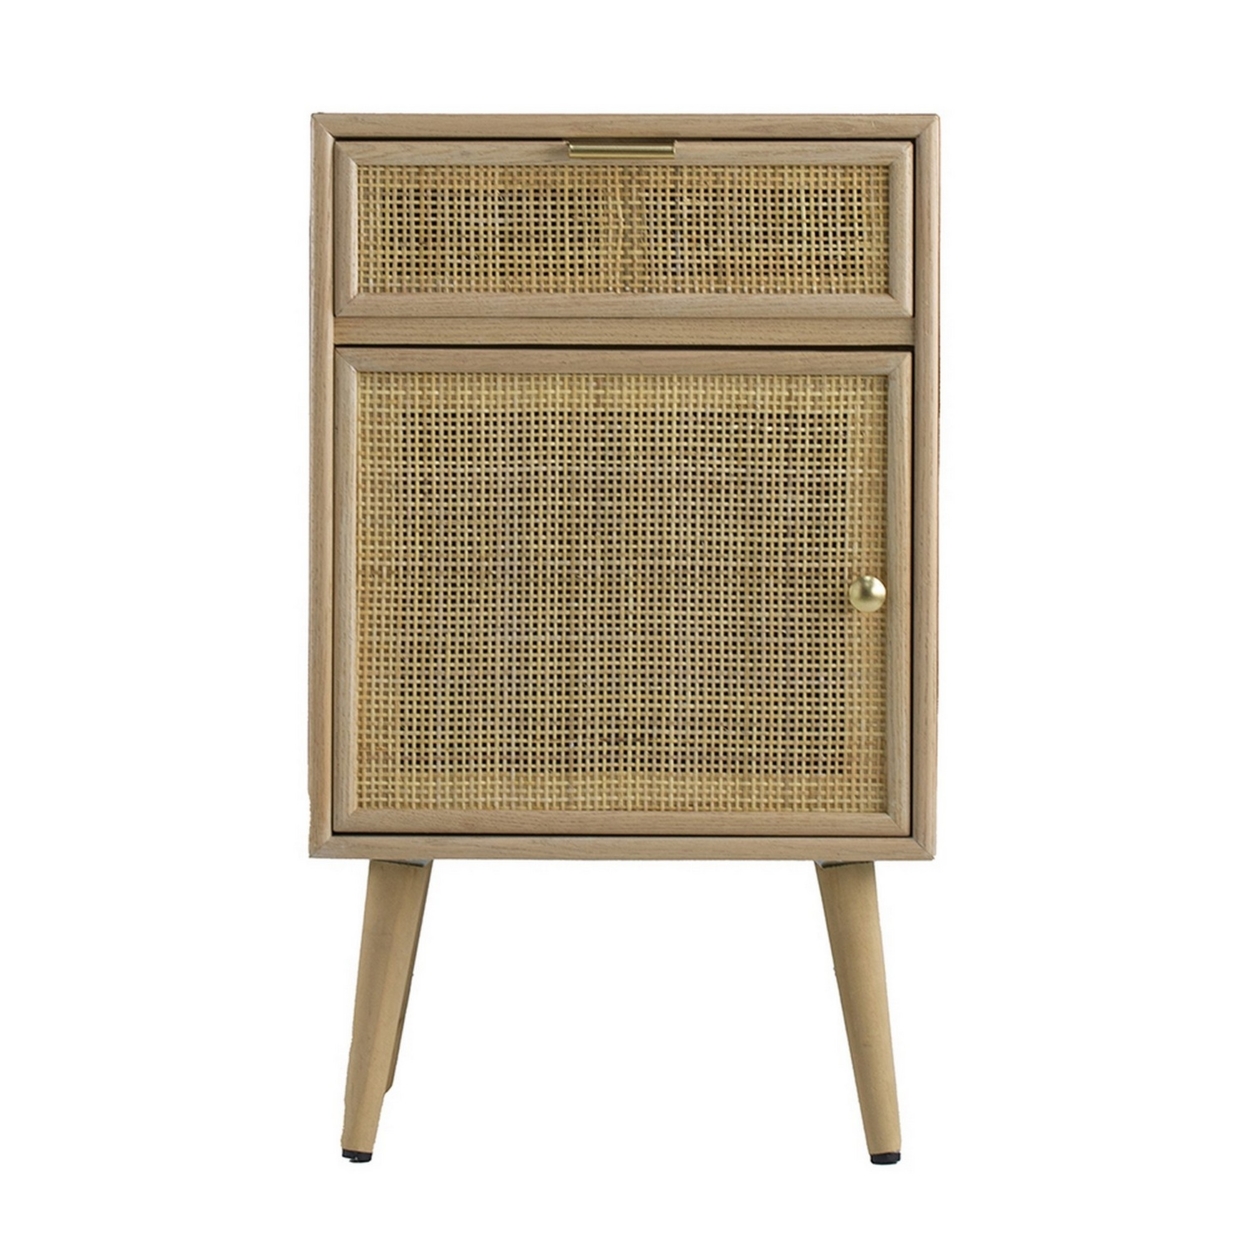 Keli 28 Inch Accent Cabinet, 1 Drawer, Pine, Woven Rattan Design, Natural, Saltoro Sherpi